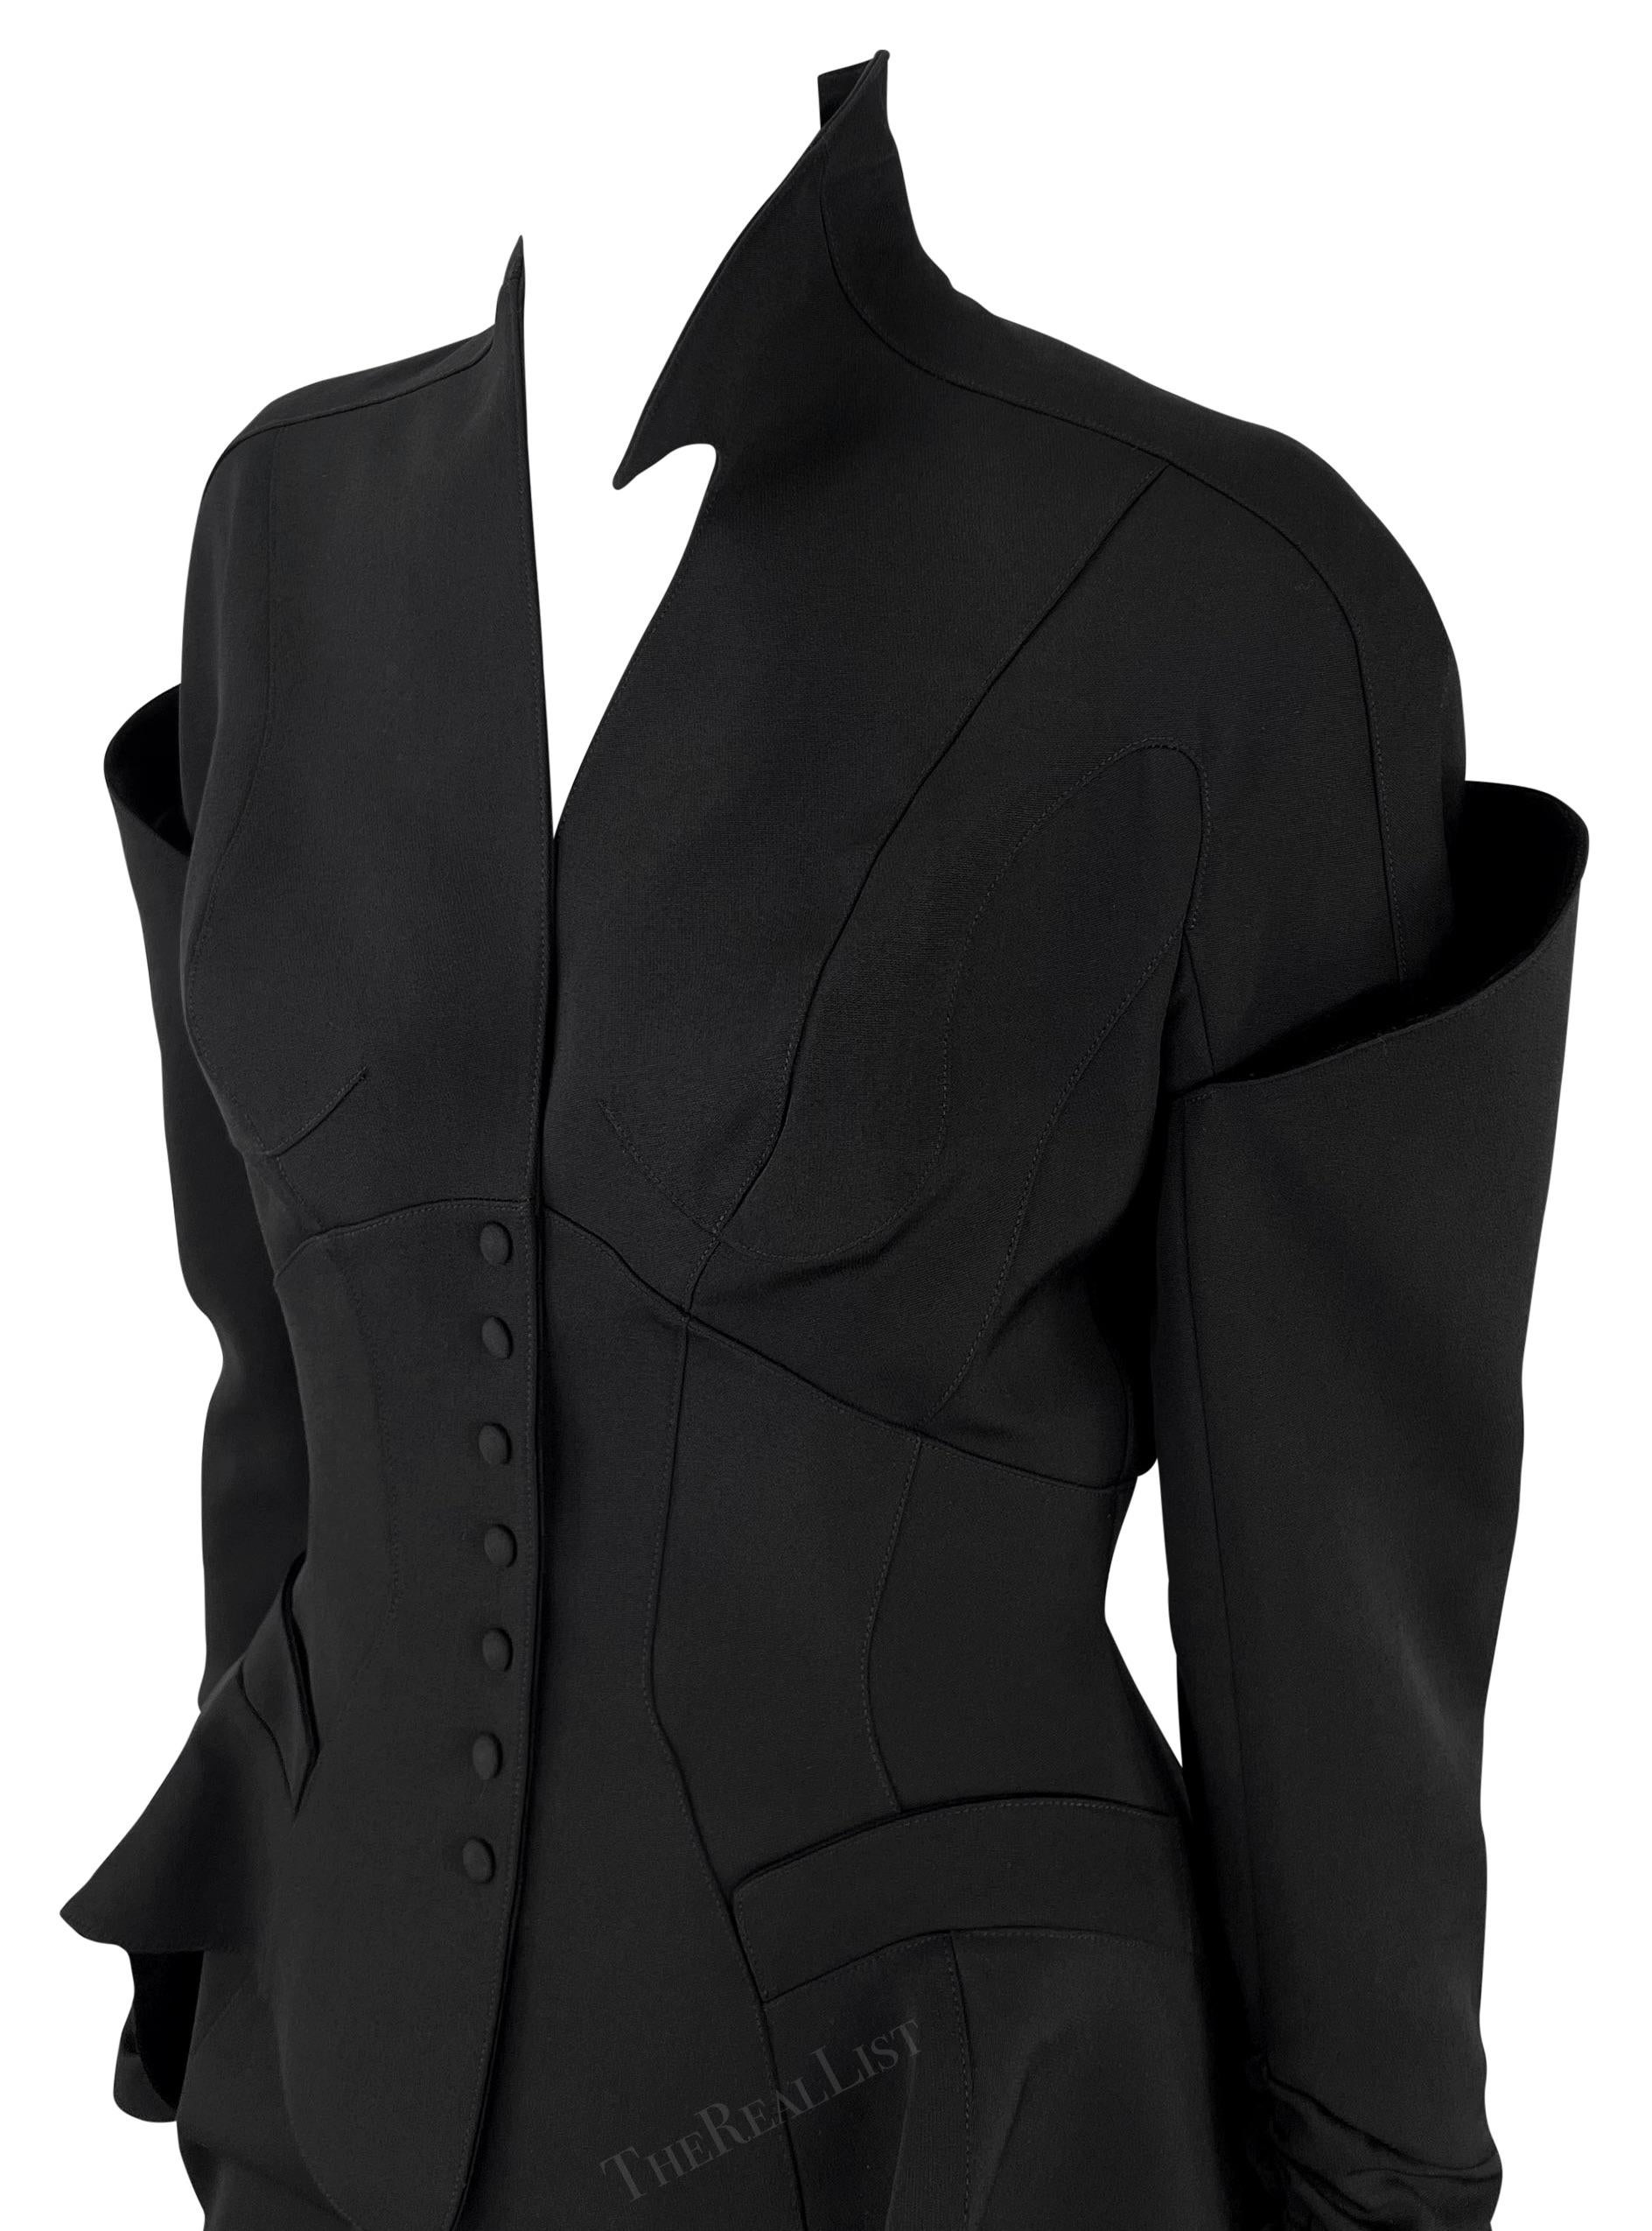 F/W 1995 Thierry Mugler Runway Ad Mini Skirt Sculptural Black Suit Velvet Trim For Sale 3